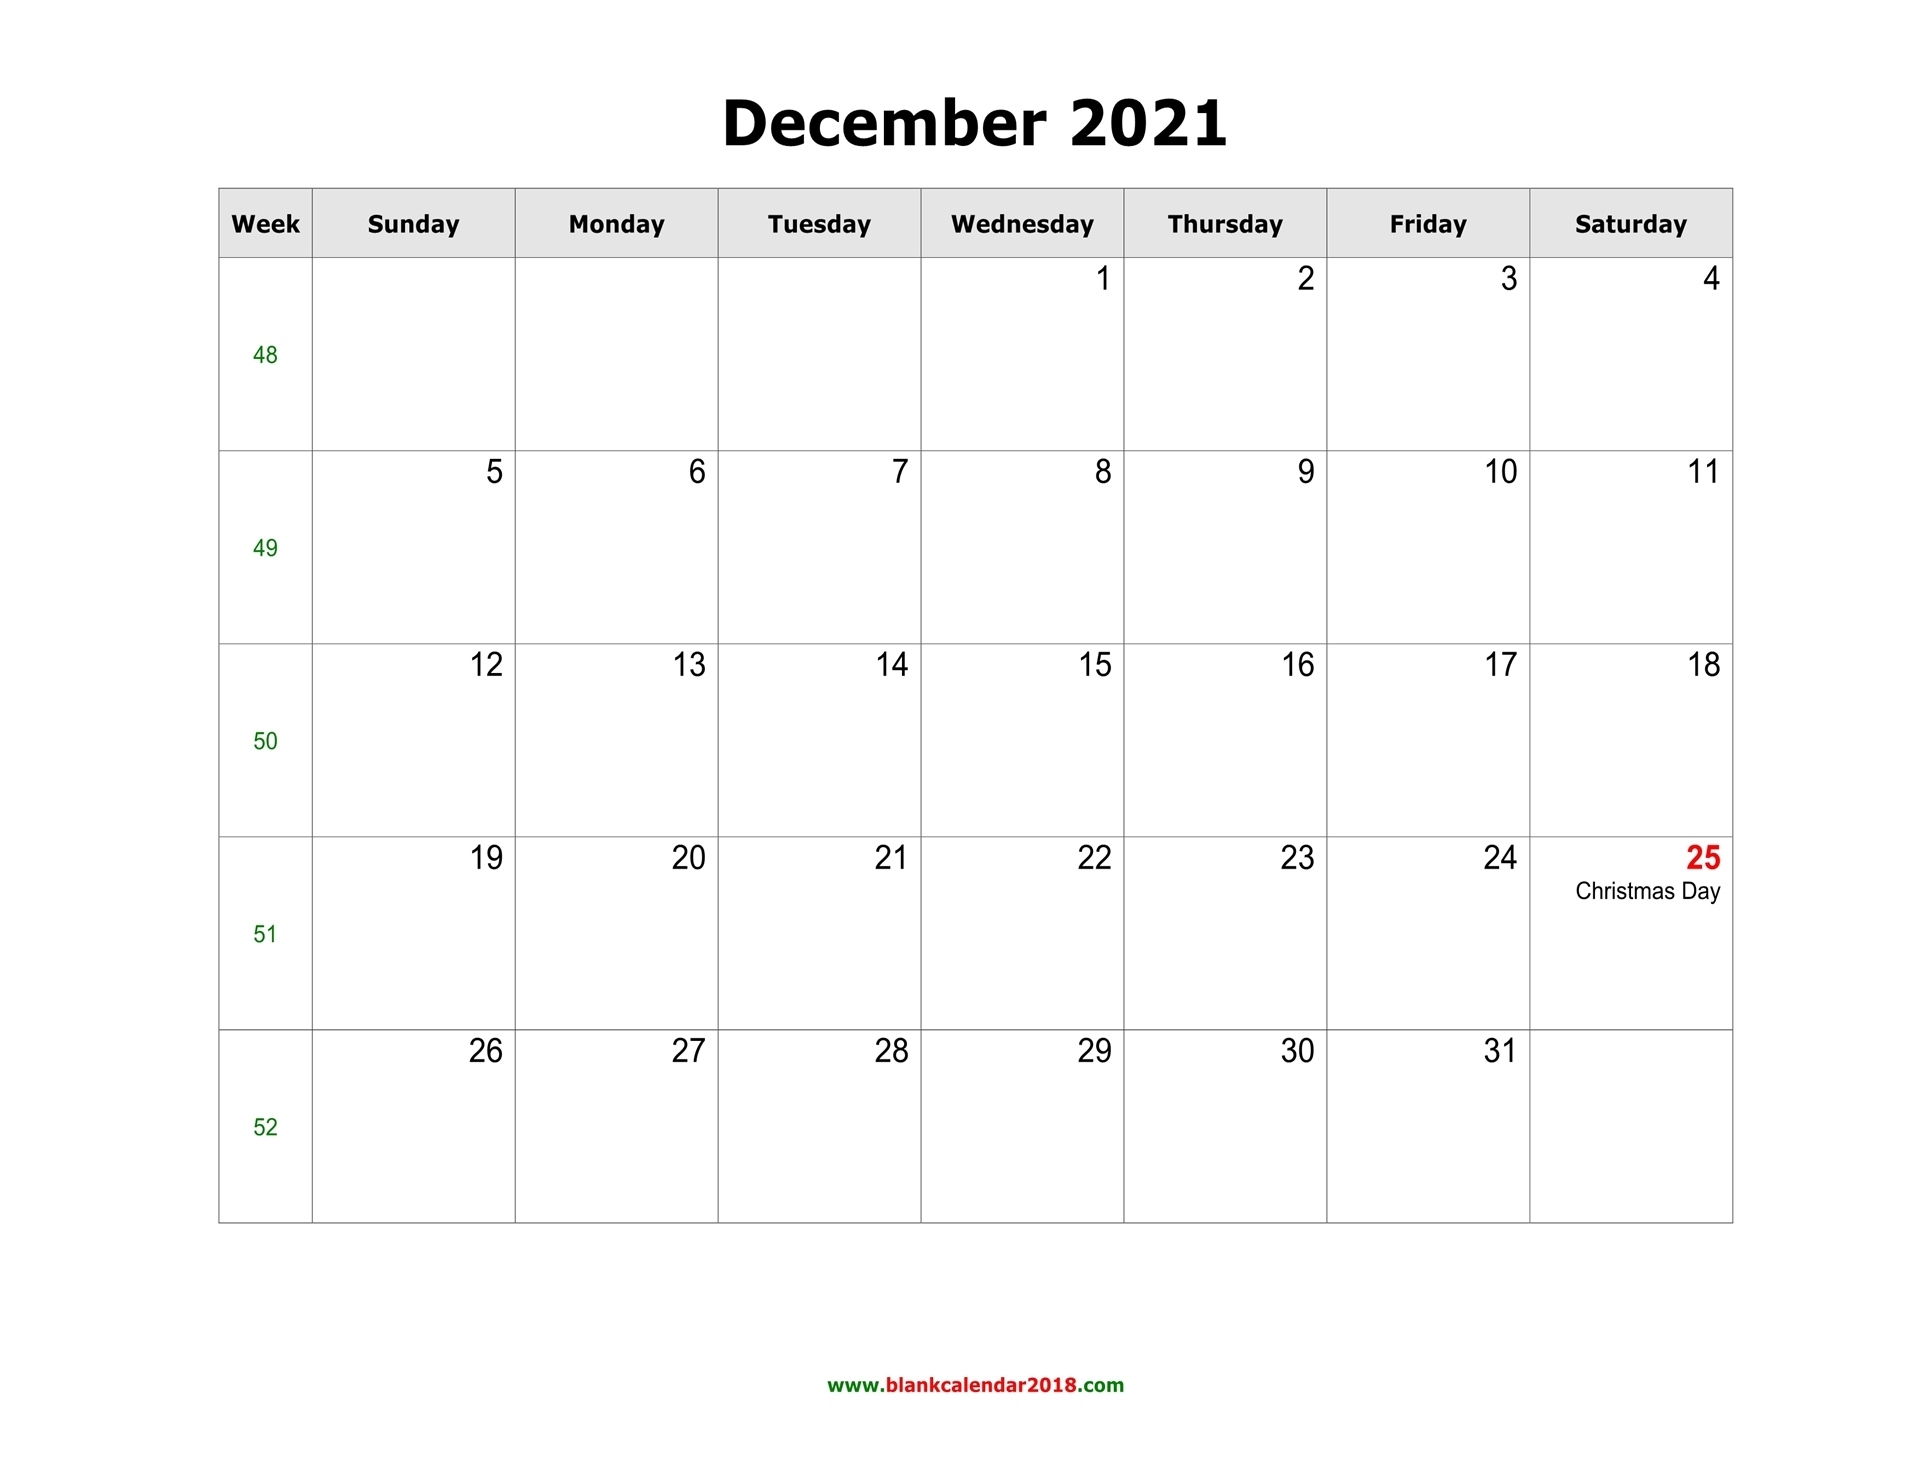 Blank Calendar For December 2021 December 2021 Hindu Calendar